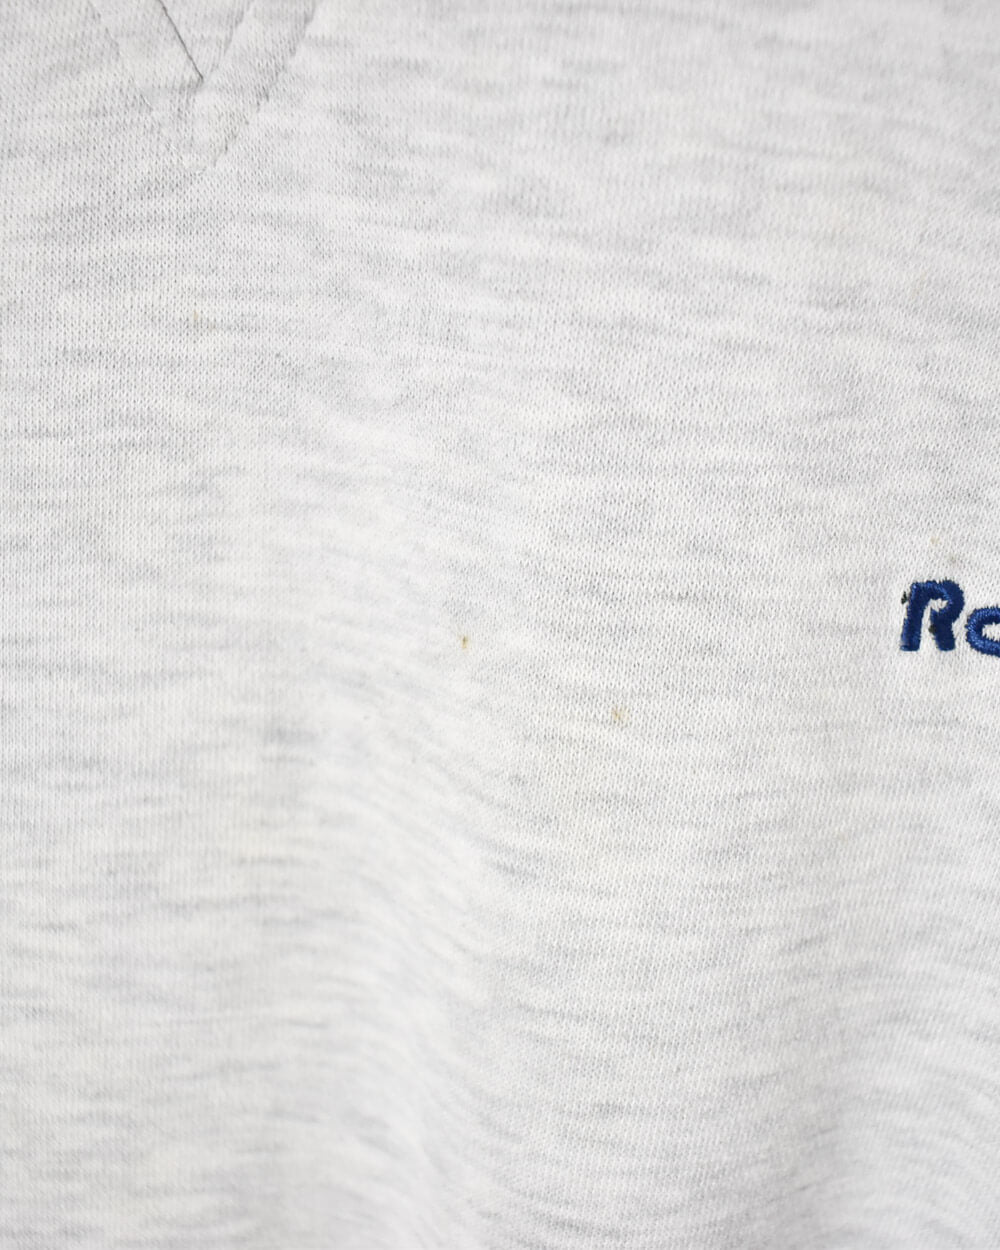 Reebok Sweatshirt - Large - Domno Vintage 90s, 80s, 00s Retro and Vintage Clothing 